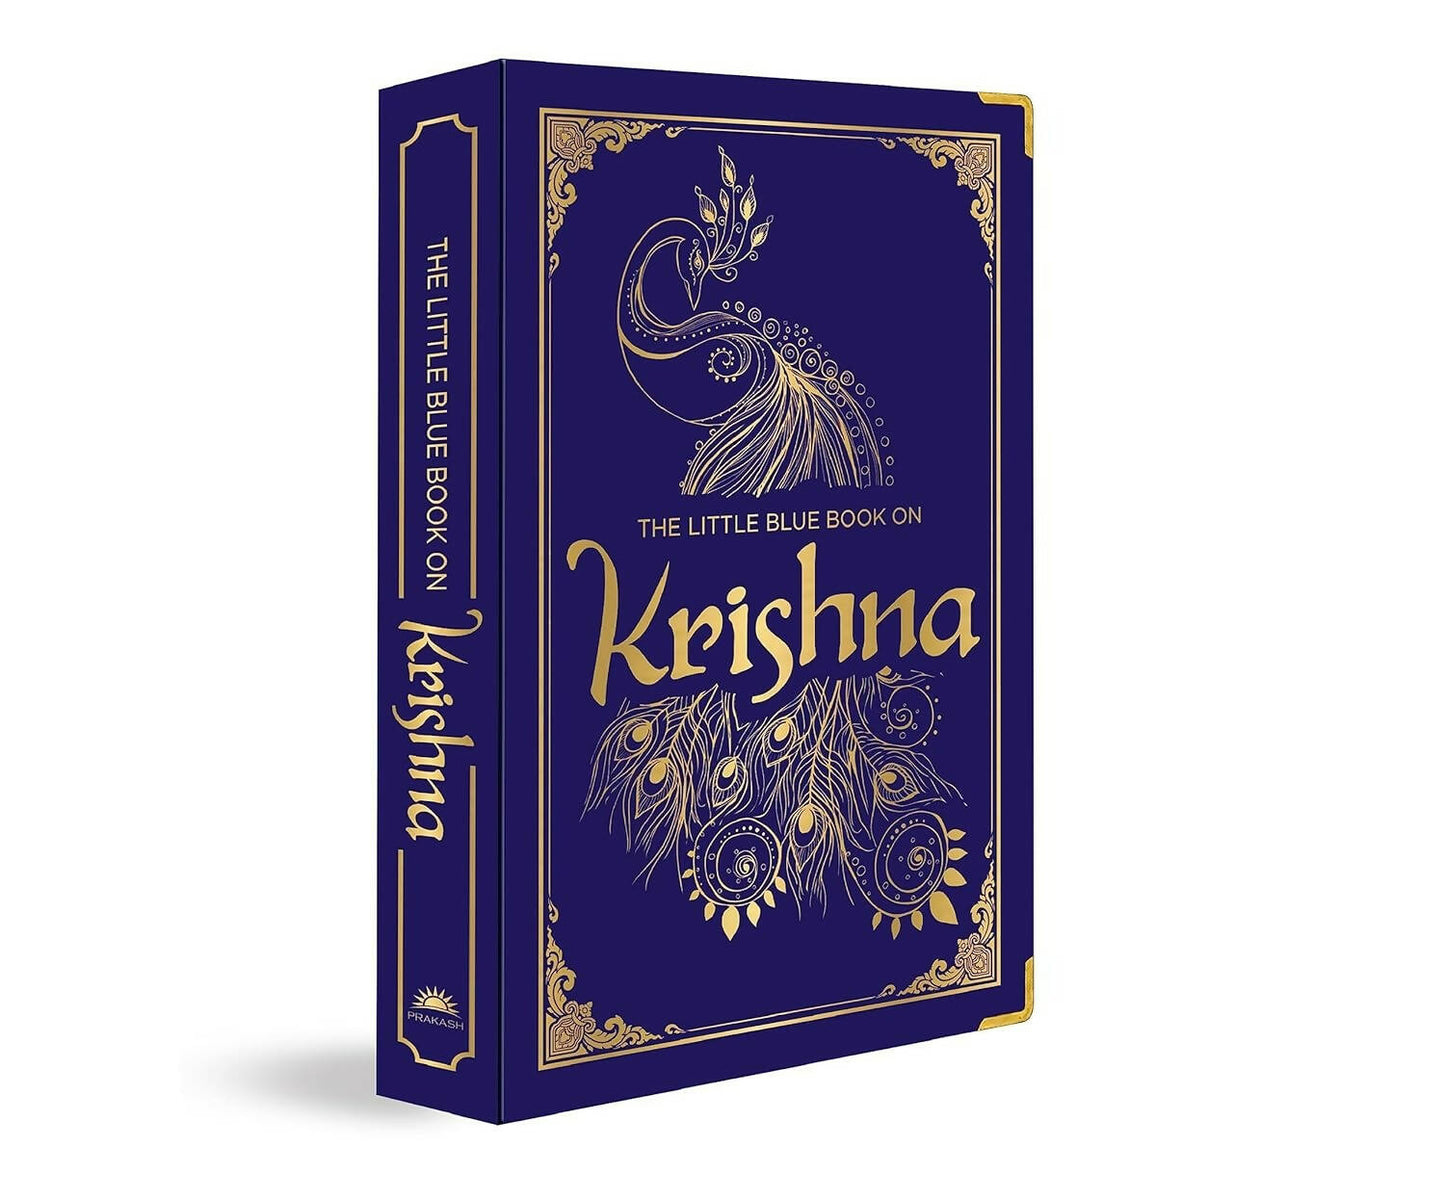 The Little Blue Book on Krishna by Shubha Vilas